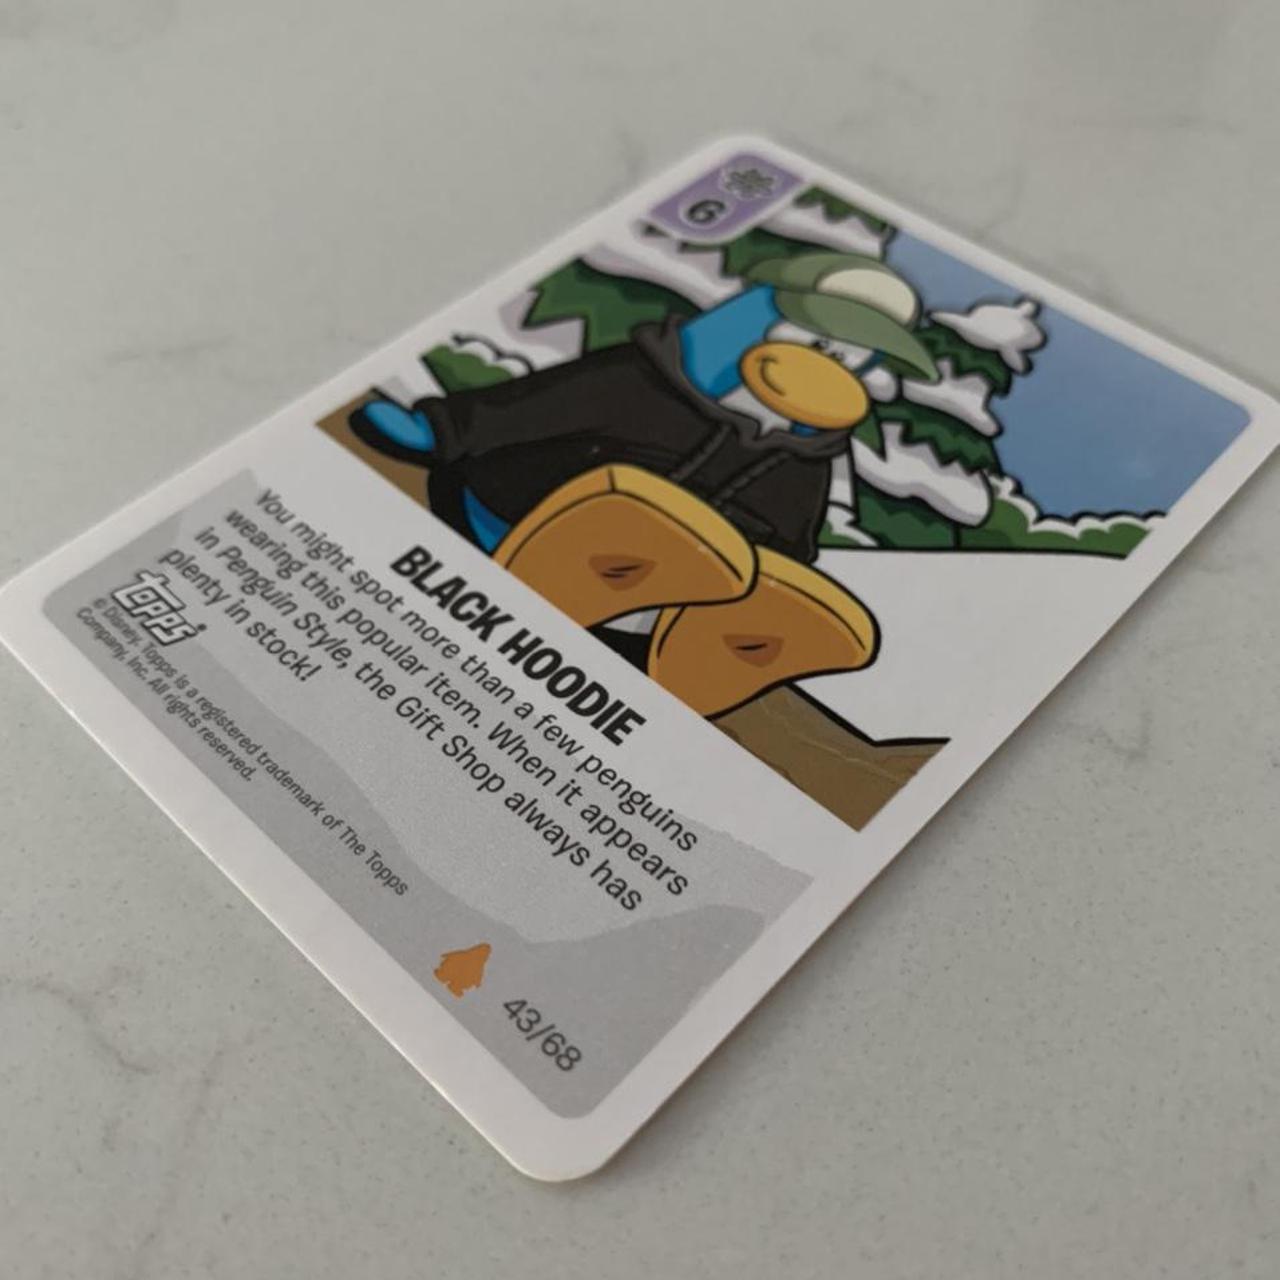 Club Penguin Card Jitsu Aveiro • OLX Portugal